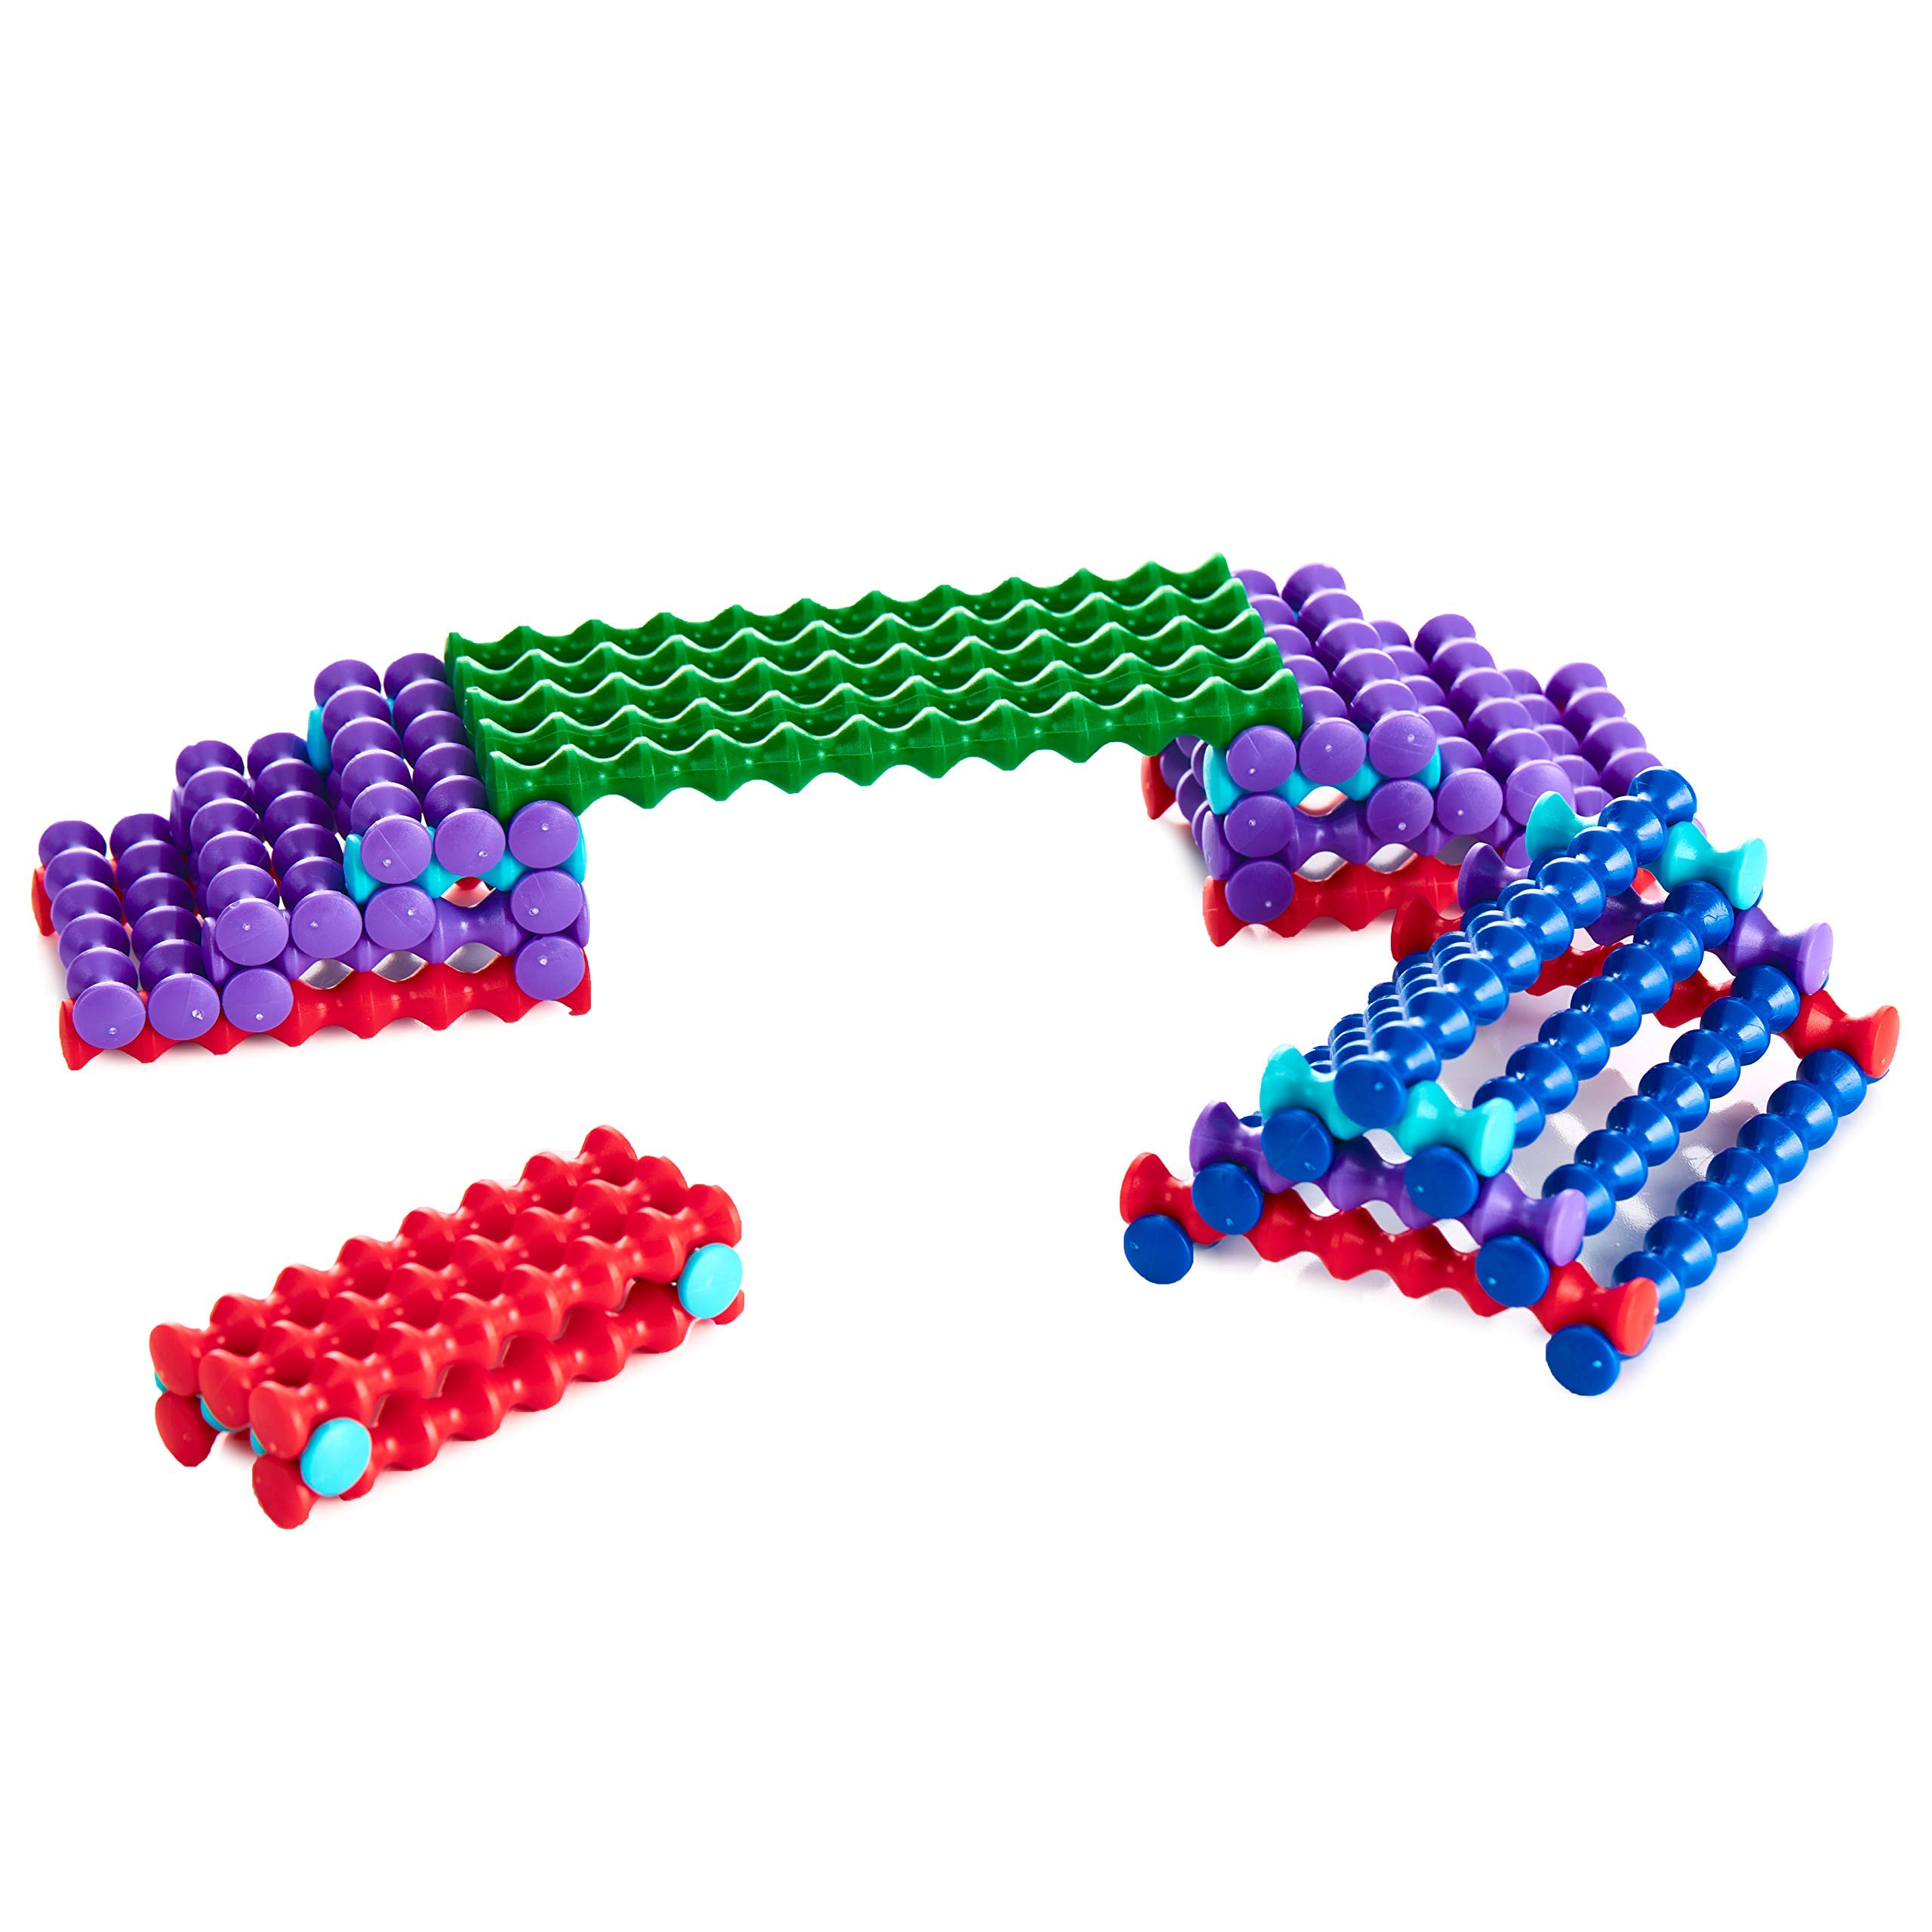 POPULAR PLAYTHINGS Playstix Master Set Construction Toy Building Blocks 141 Piece Kit